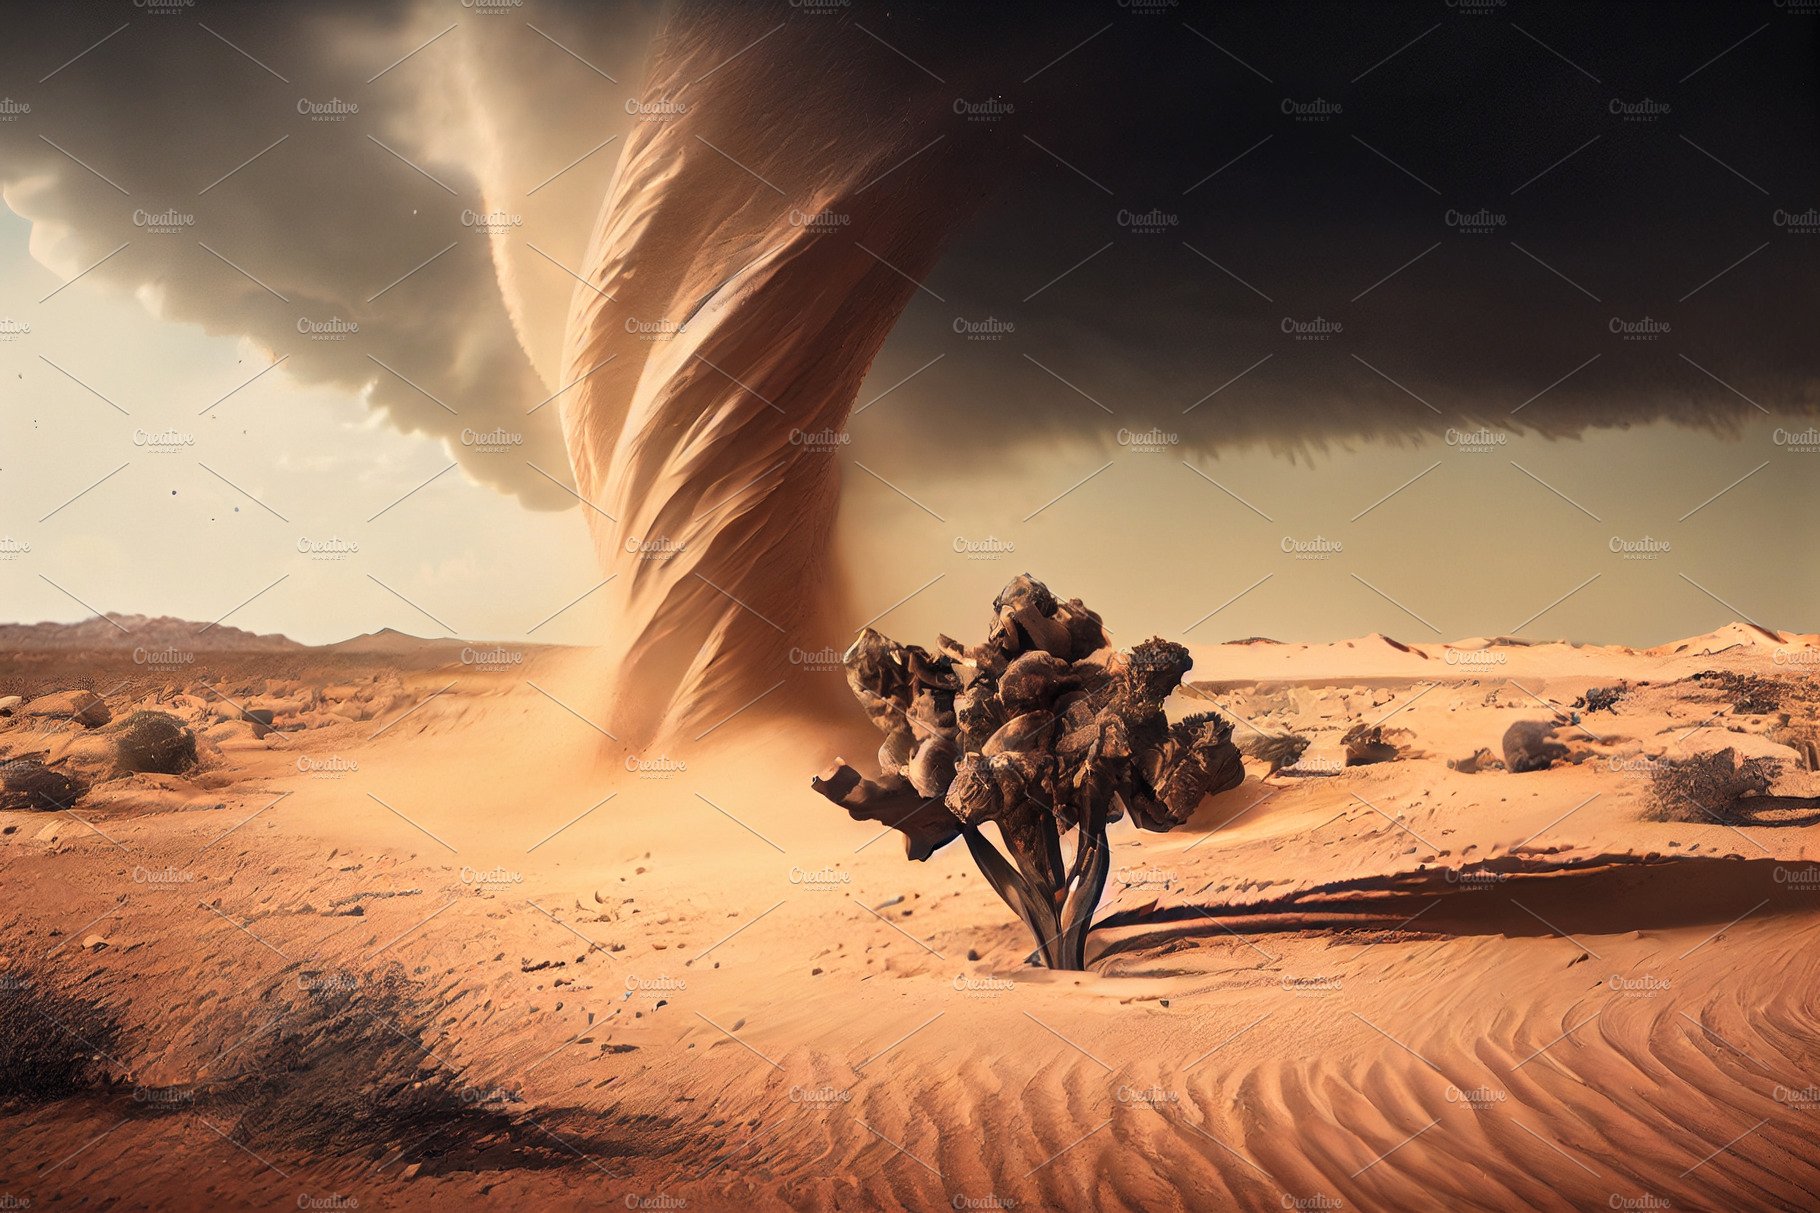 Desert twister sand tornado. Whirlwind kick up dust on the plain in the desert cover image.